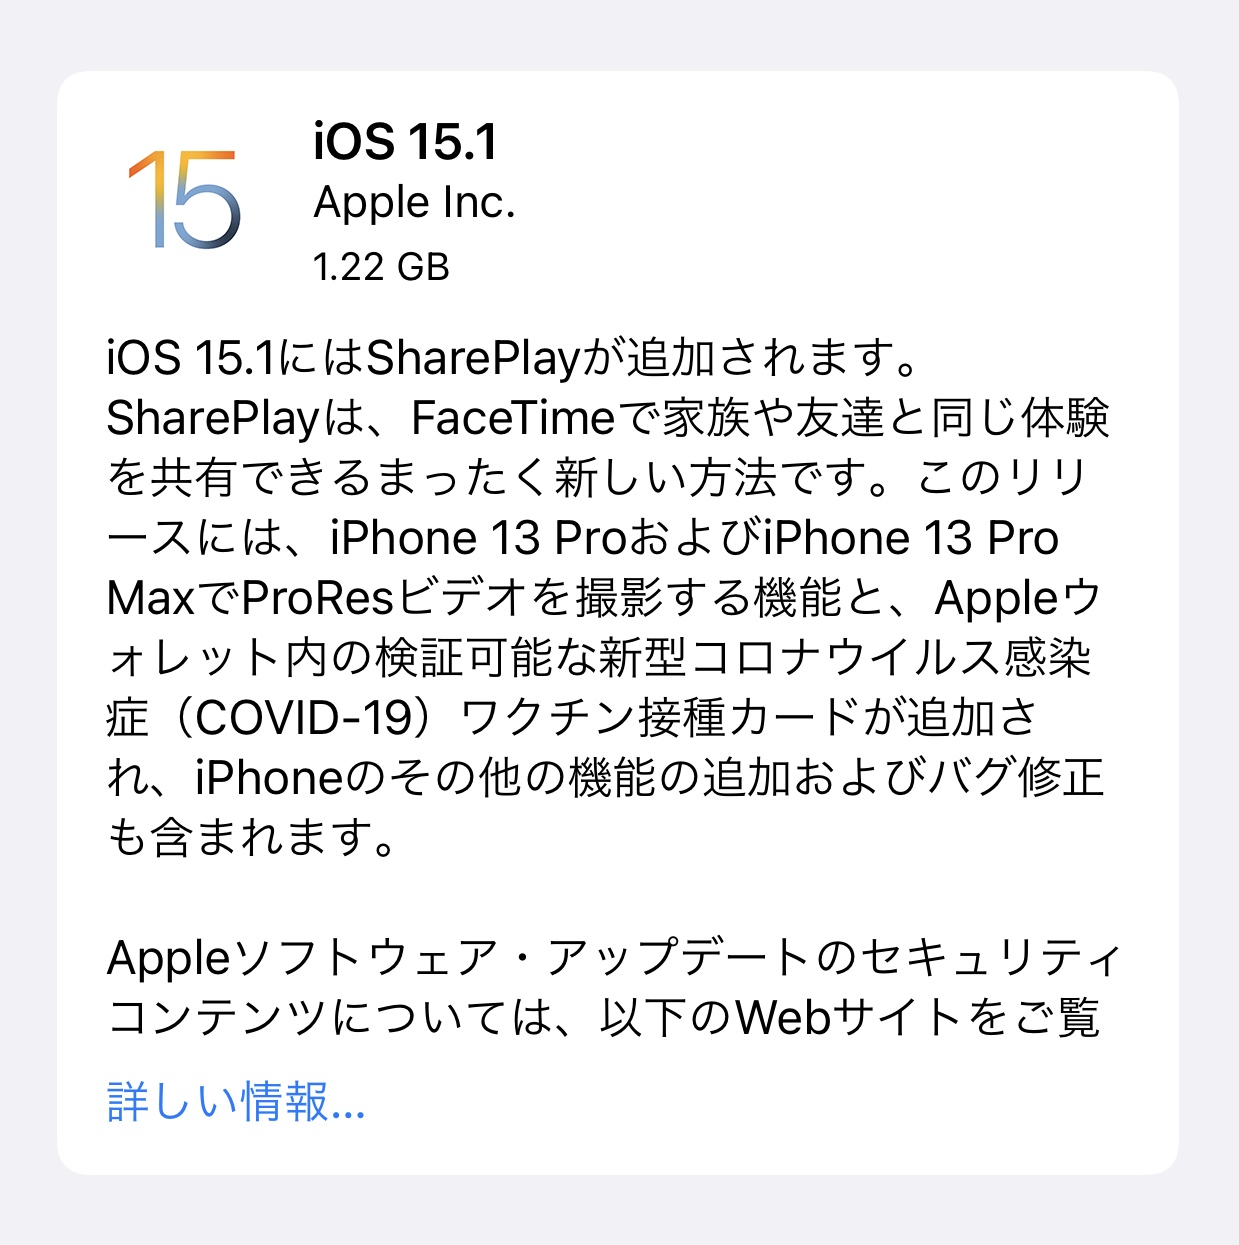 Appleが、「iOS 15.1」ソフトウェア・アップデートの提供を開始しました。